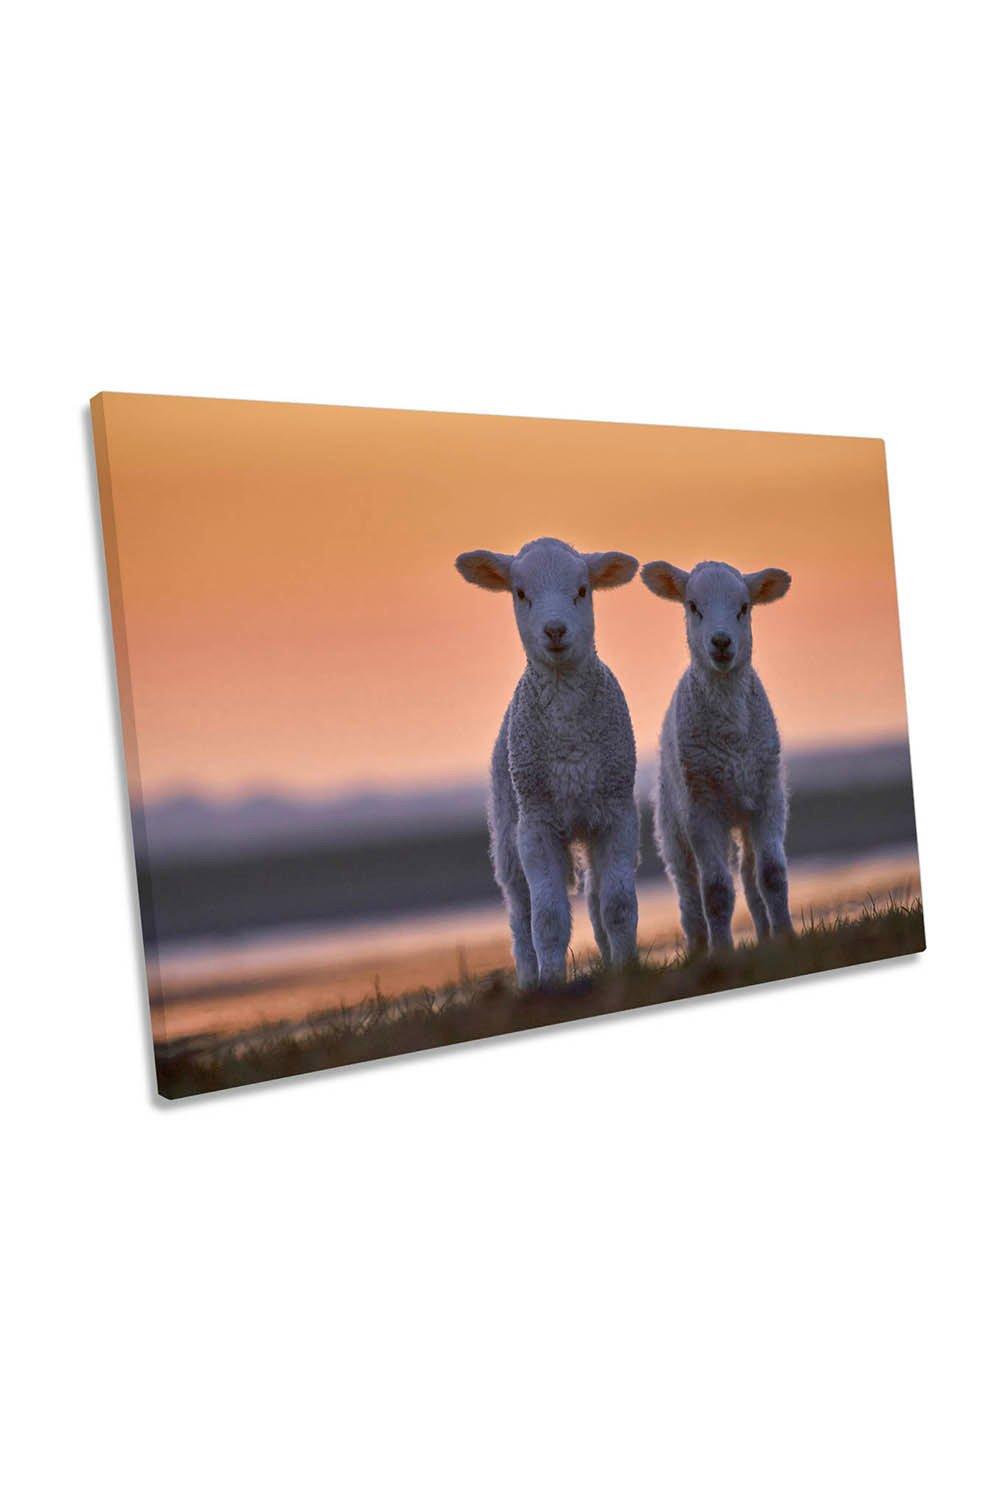 Lamb Twins Orange Sunset Farm Canvas Wall Art Picture Print